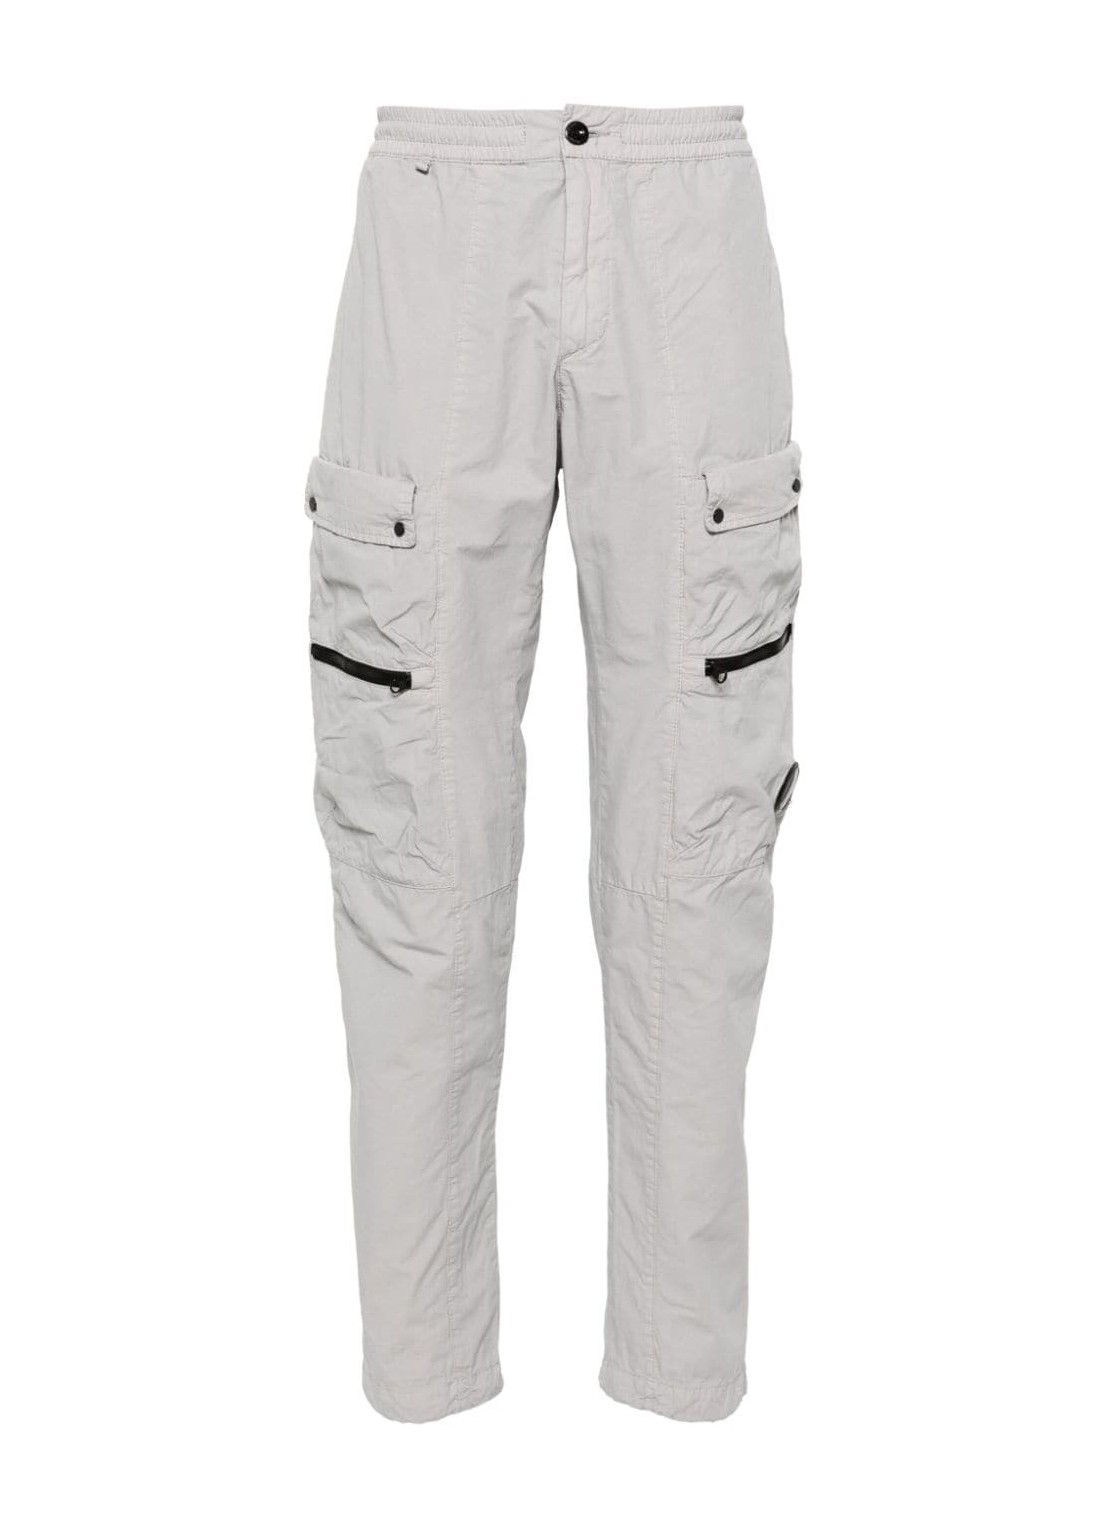 Pantalon c.p.company pant  man micro reps cargo track pants 16cmpa060a006475g 913 talla gris
 